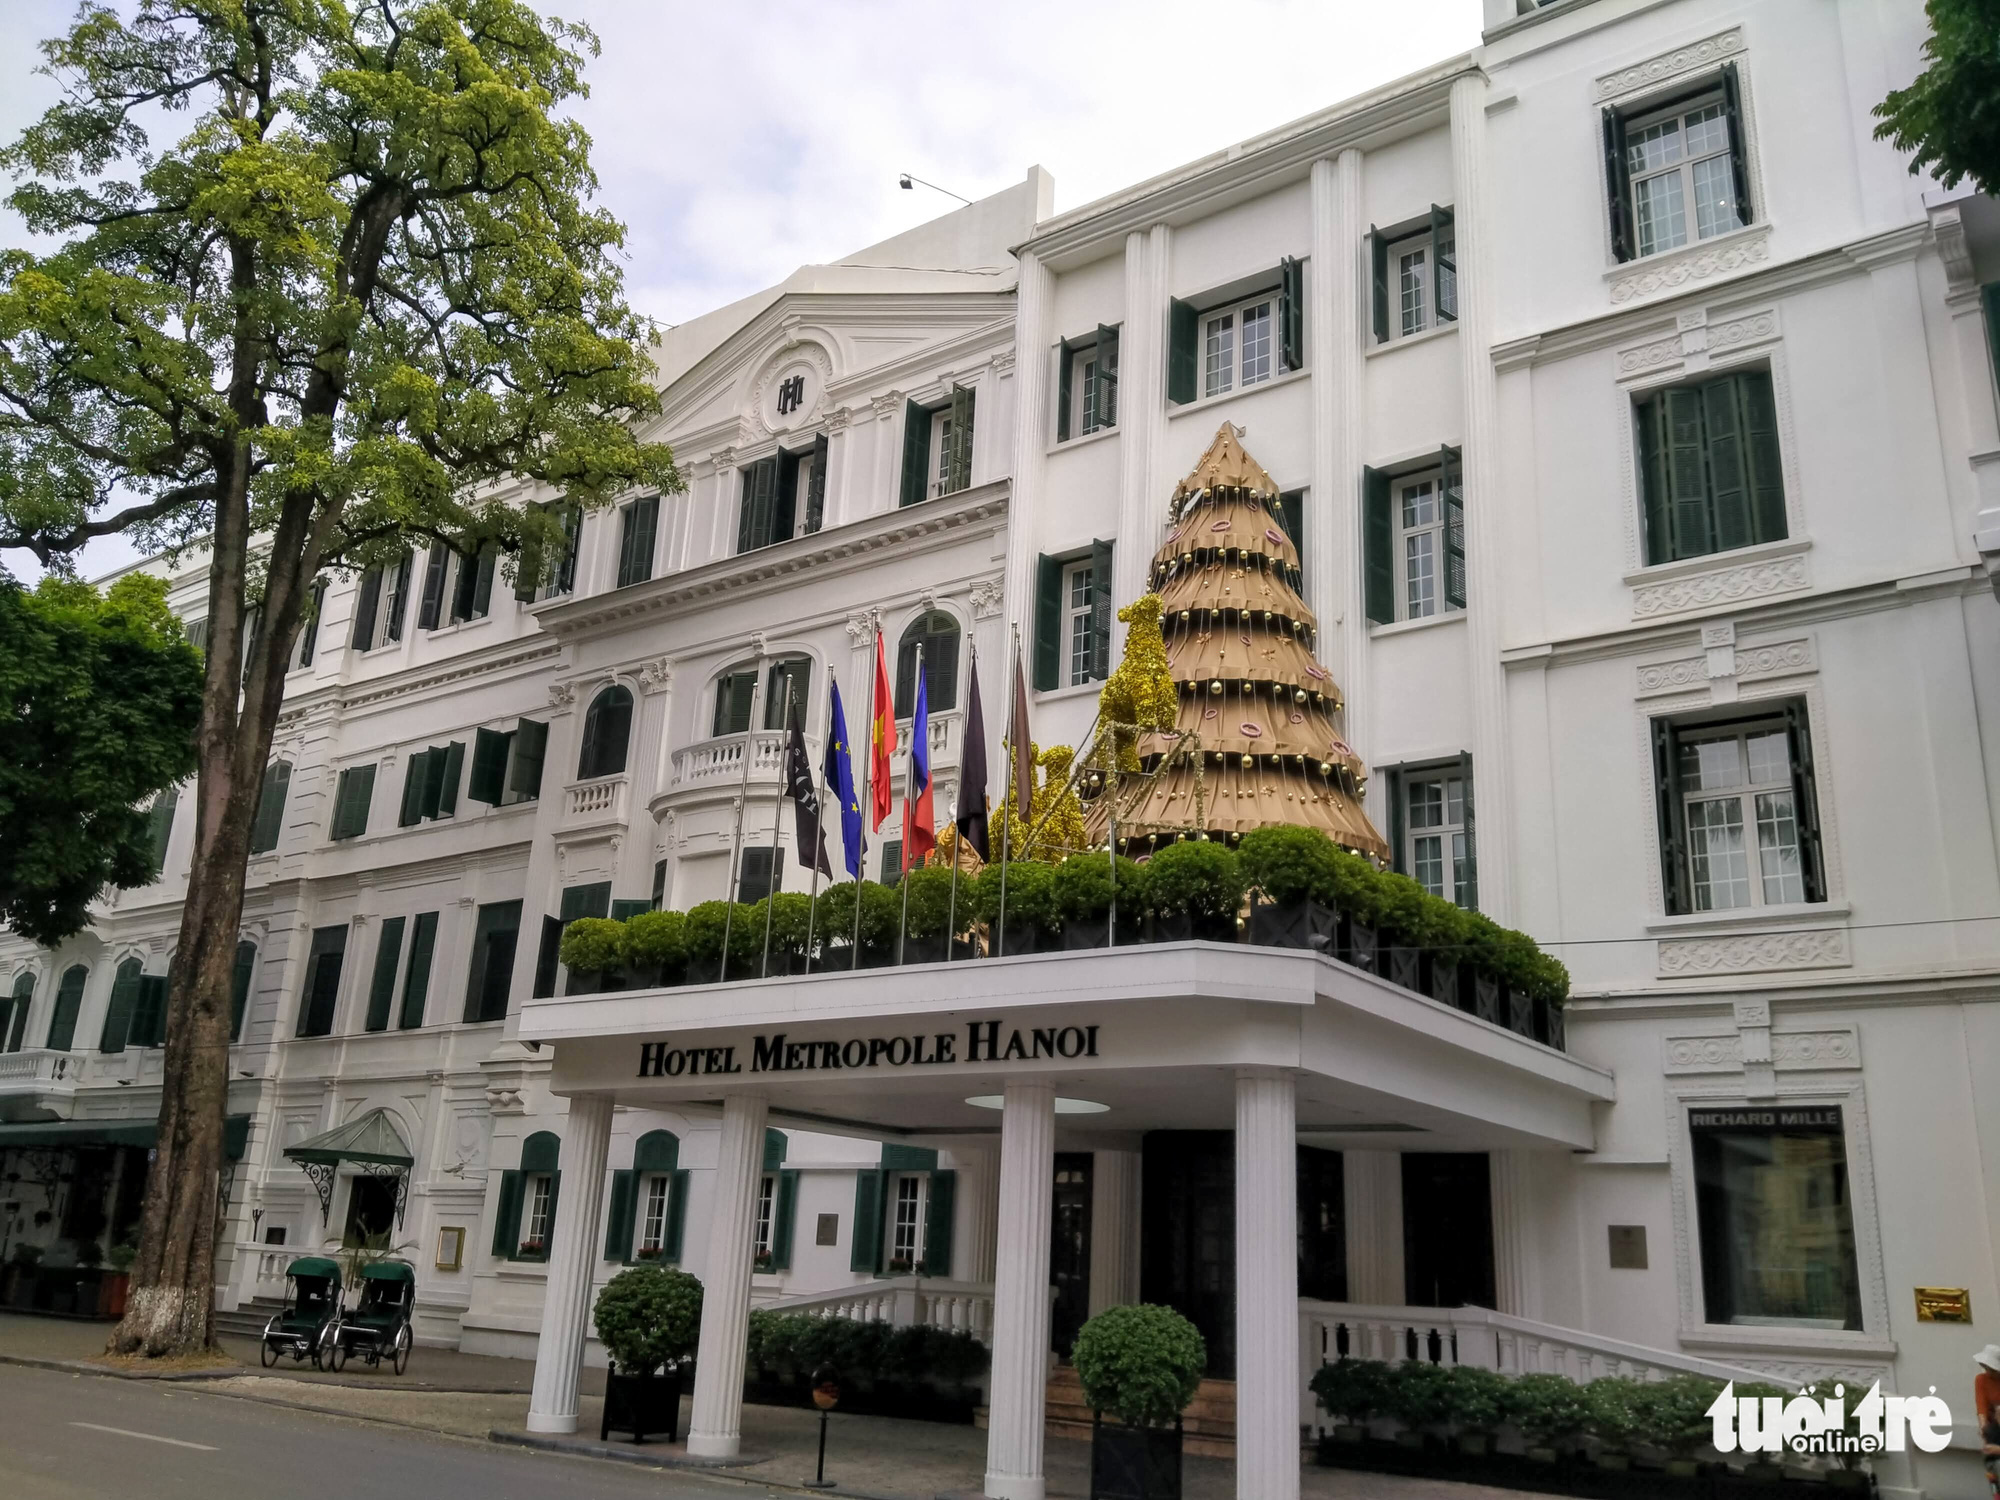 Nearly 1,000 Hanoi hotels shuttered as COVID-19 hits hard